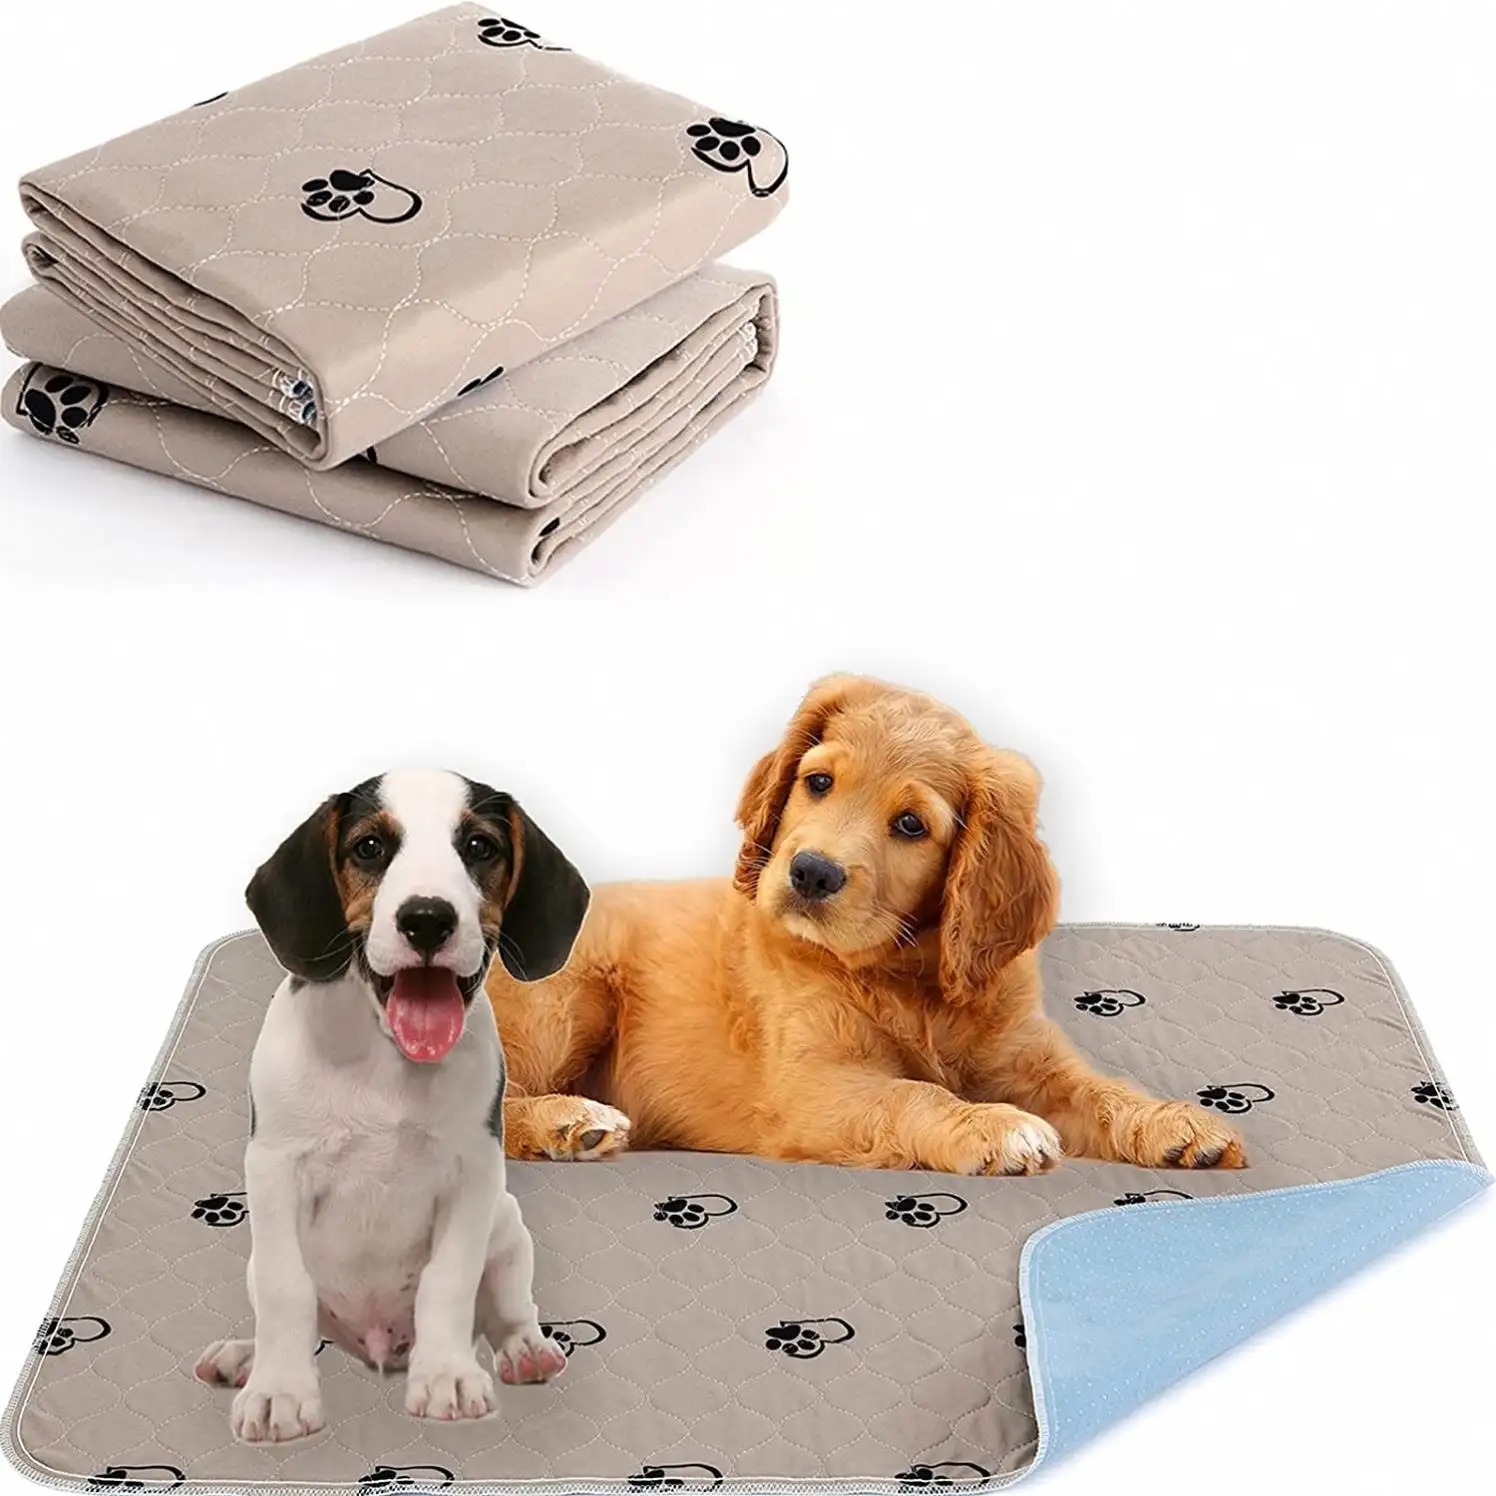 DBAT tamaño personalizado Whelp impermeable reutilizable 36x48 almohadillas para mascotas lavable cachorro entrenamiento Pee Pad reutilizable